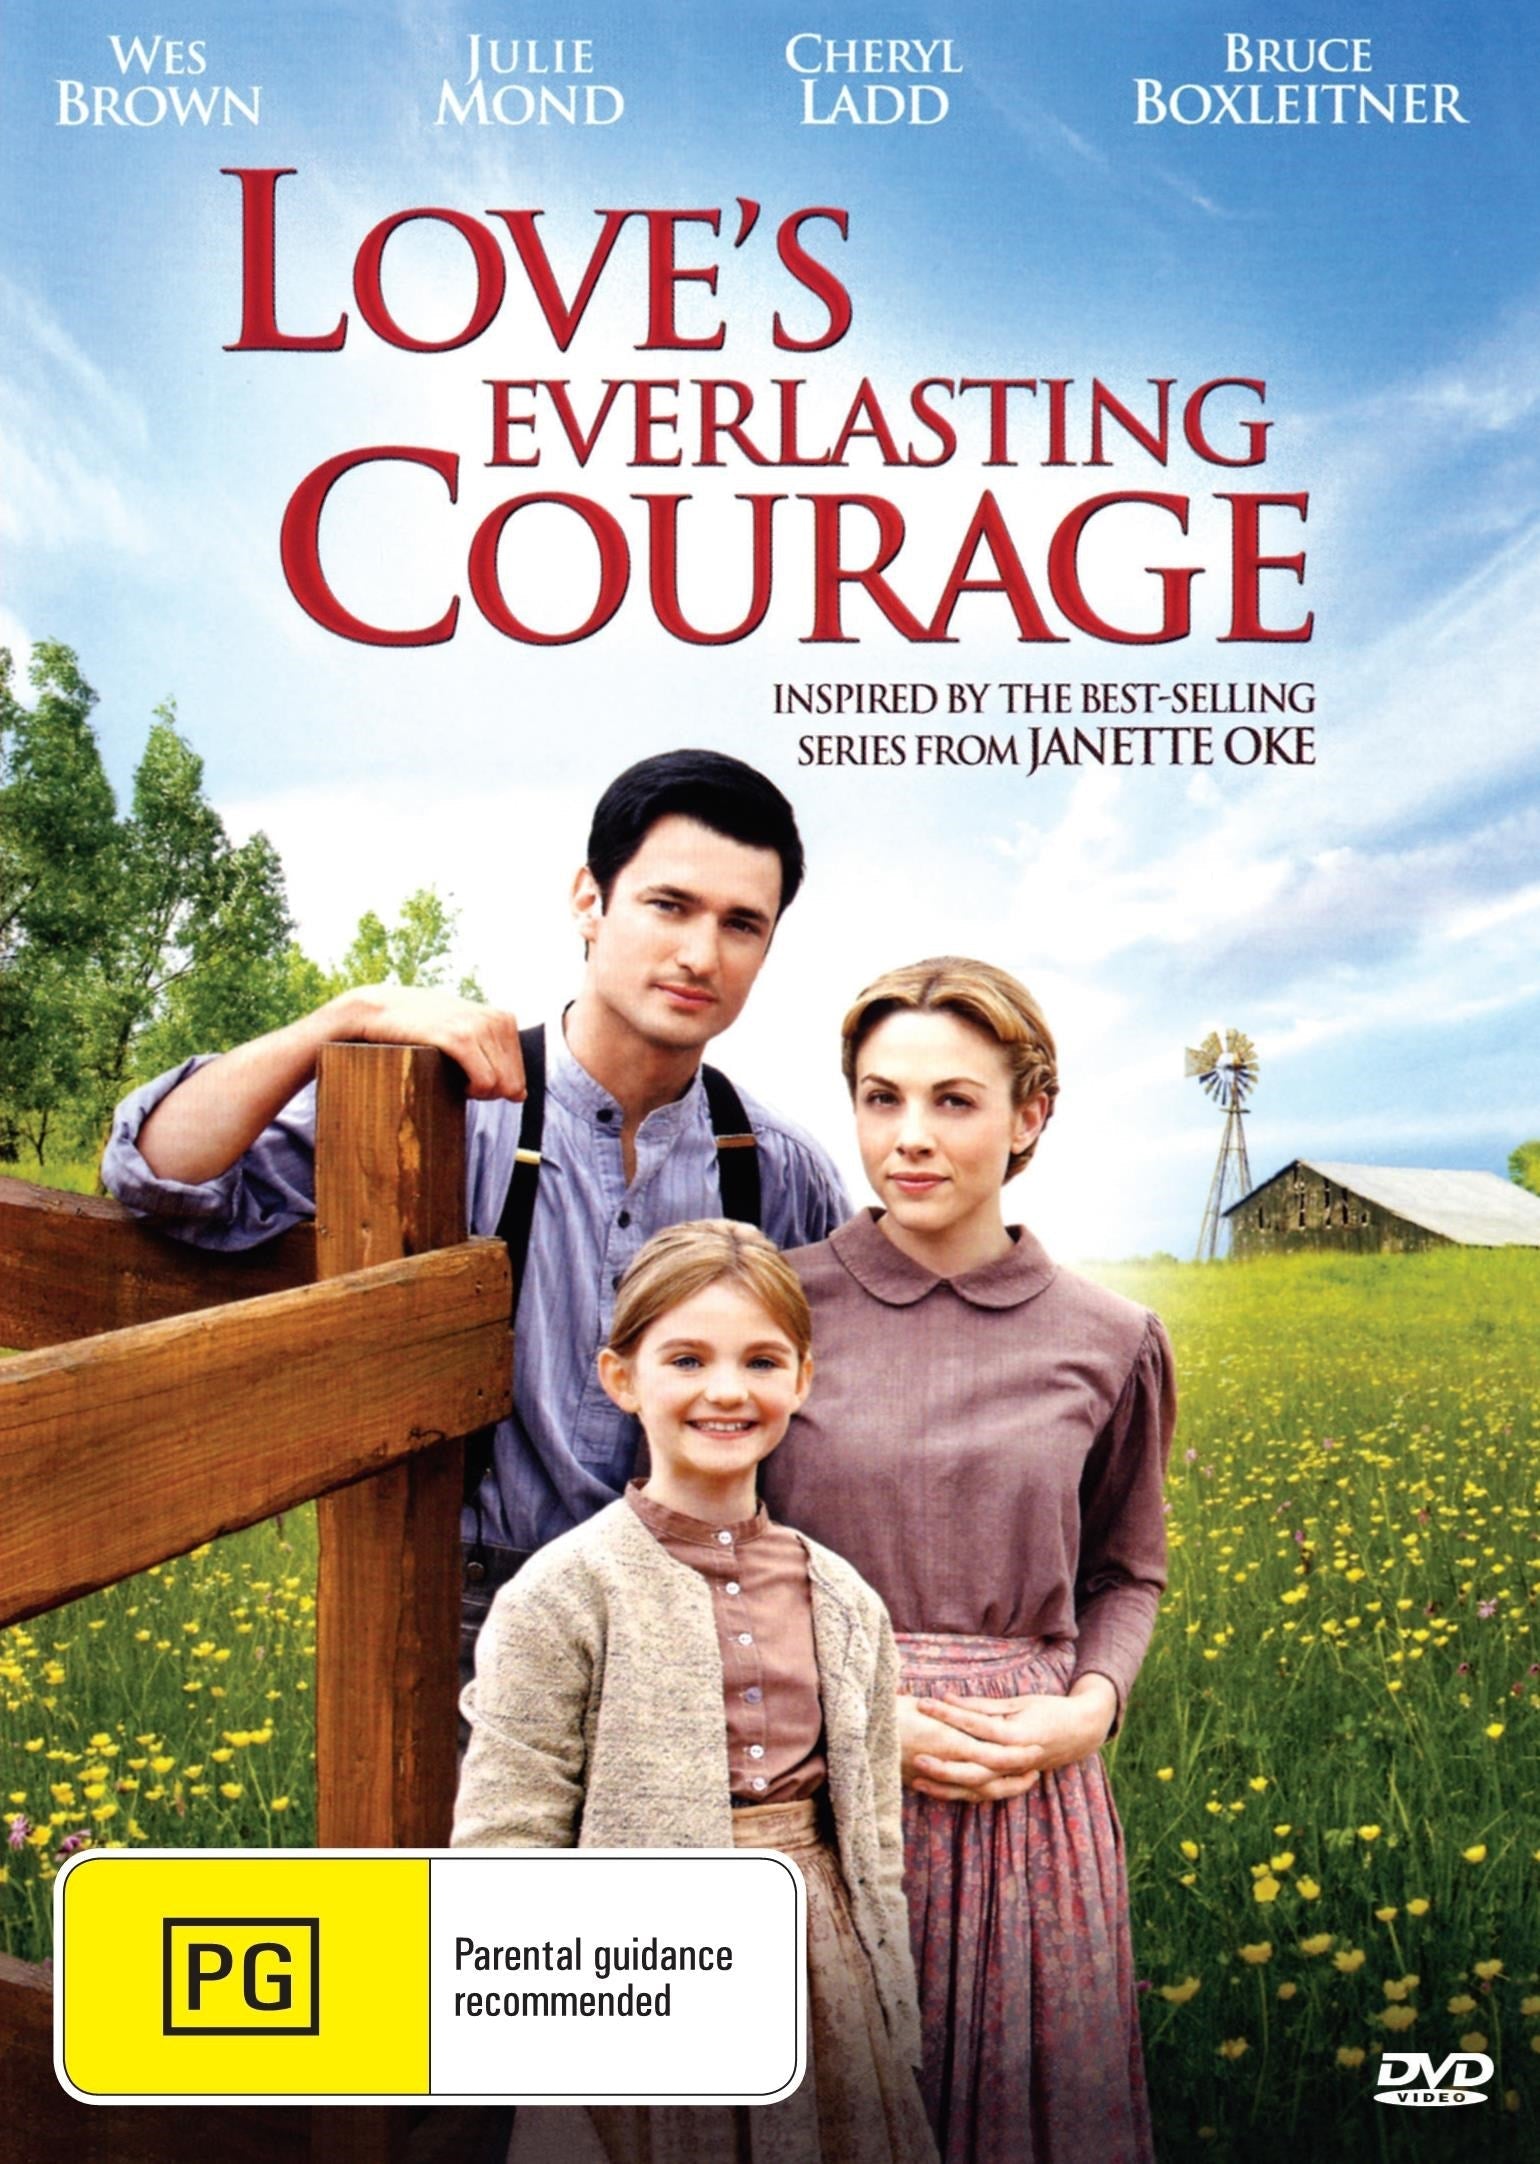 Love's Everlasting Courage rareandcollectibledvds